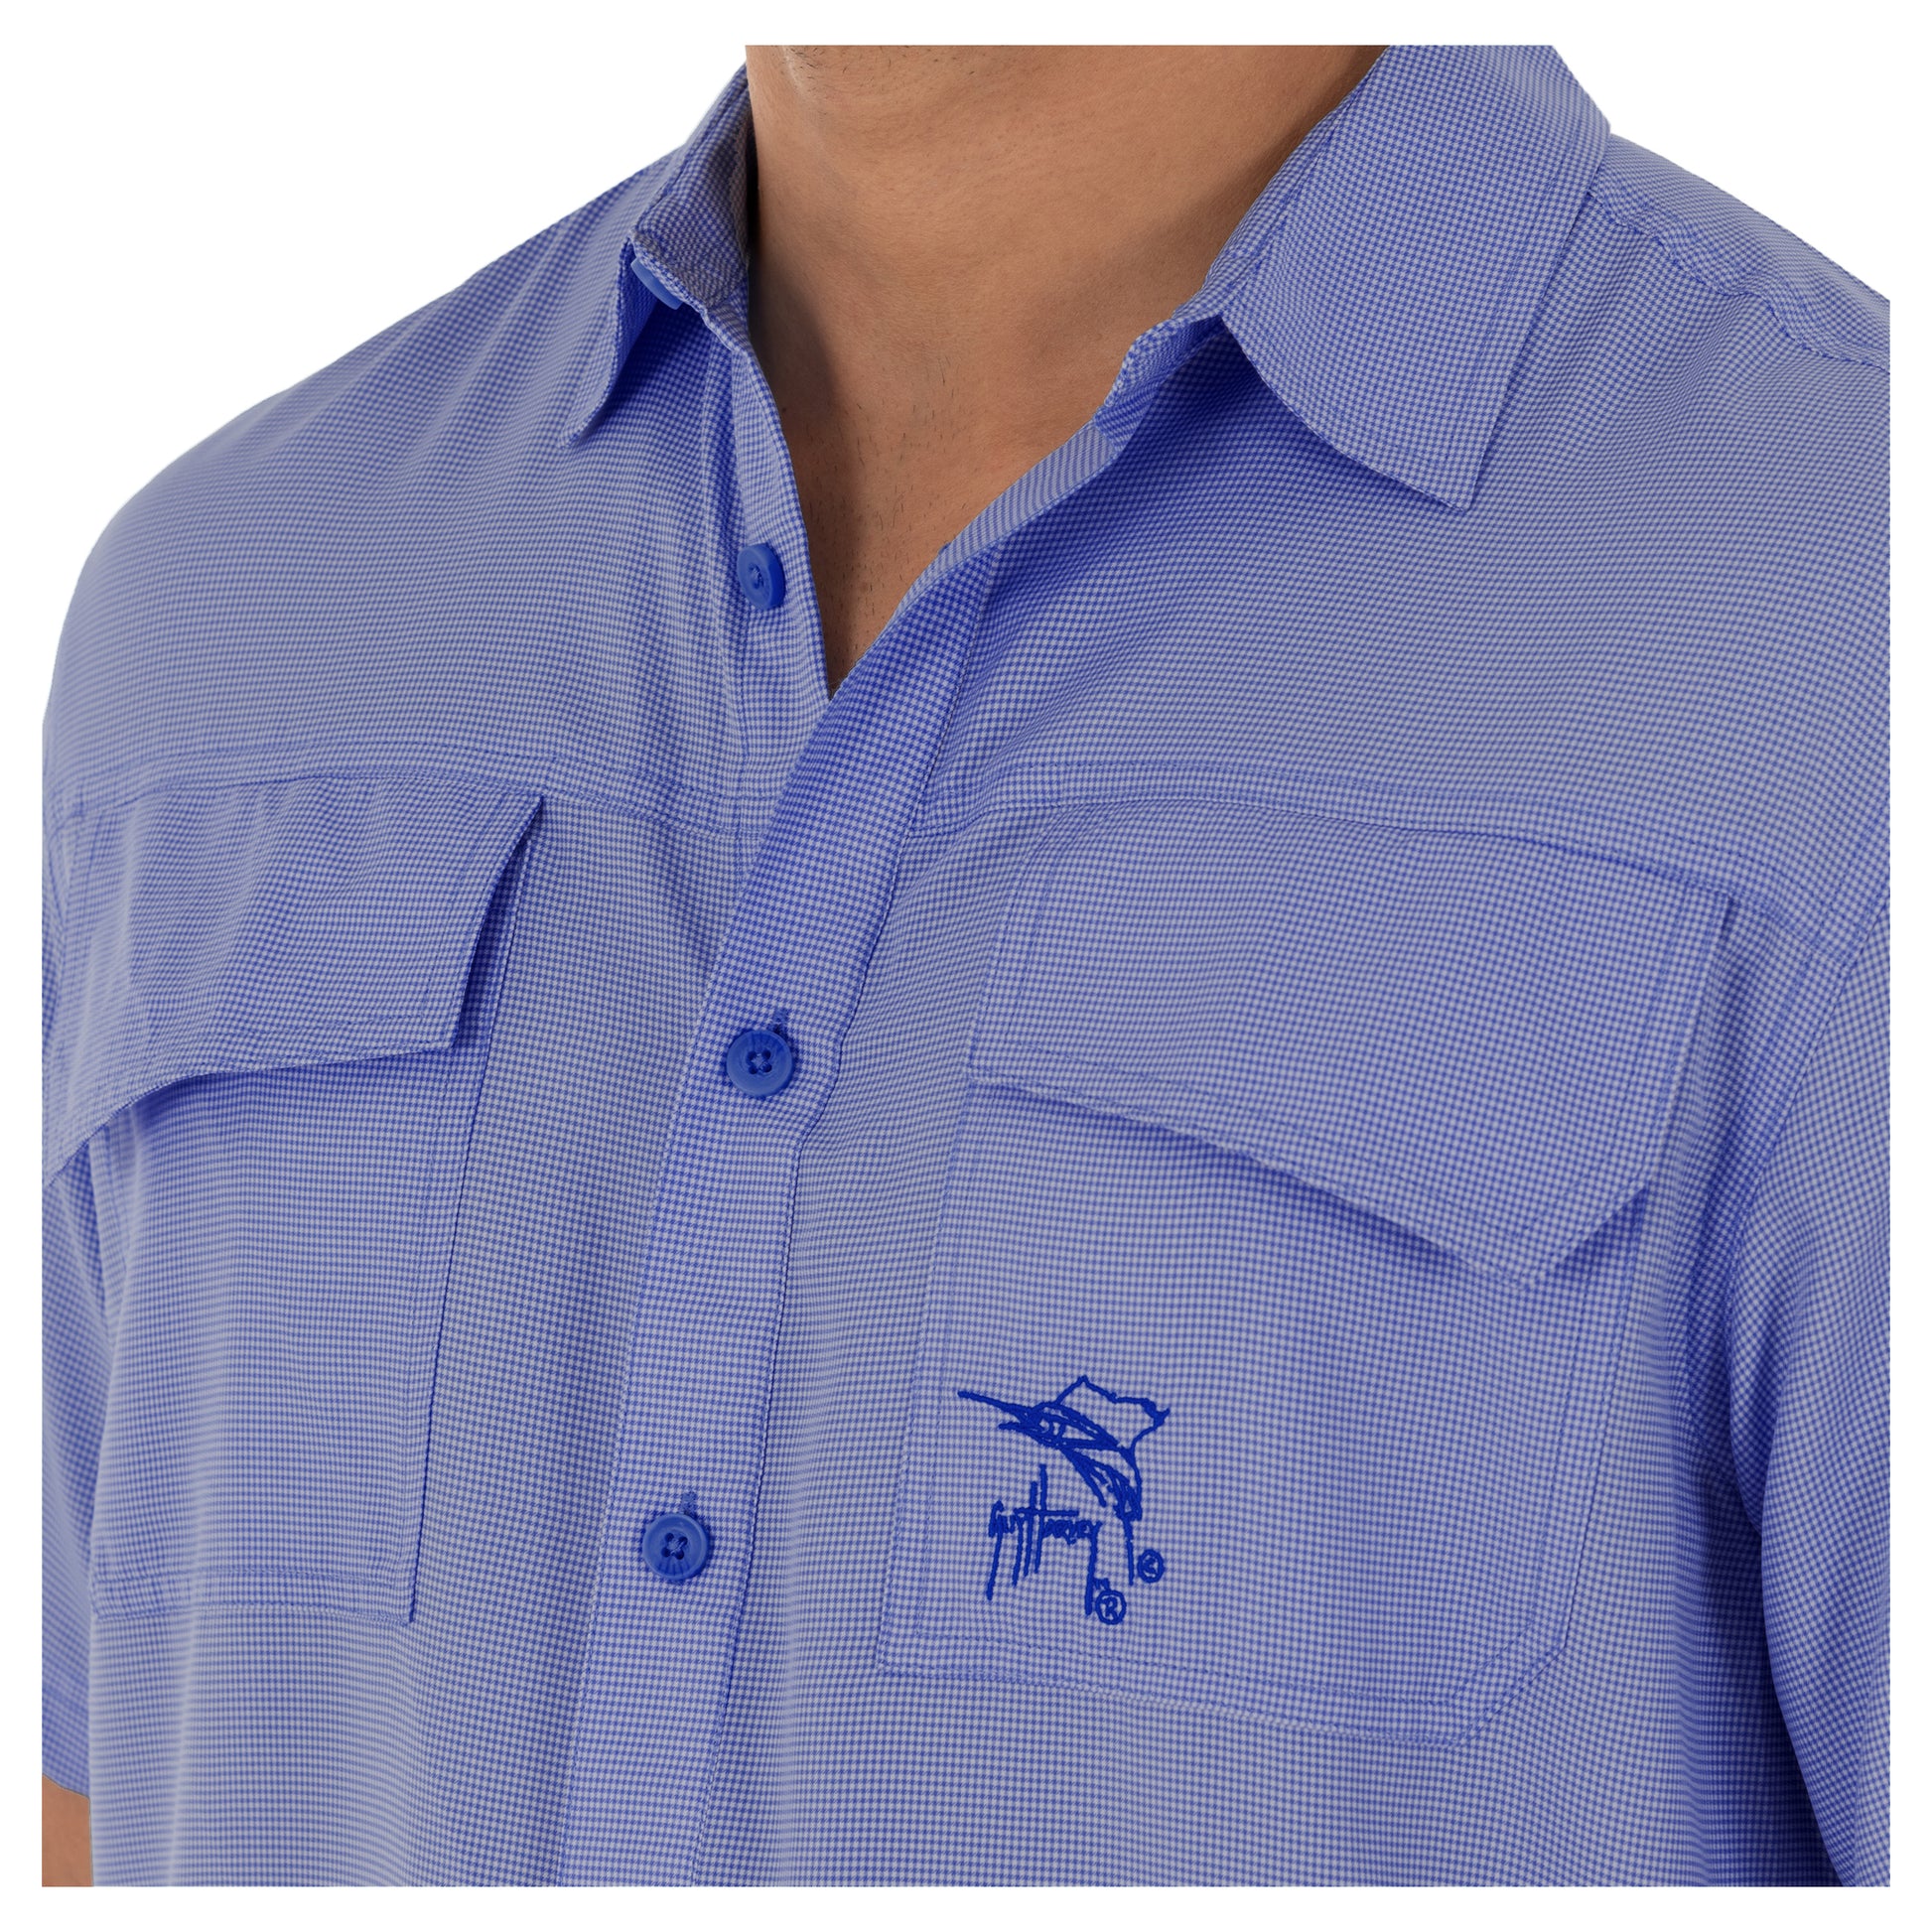 Fishing Shirts - Men's - Blue Gingham Fishing Shirt - FH Outfitters